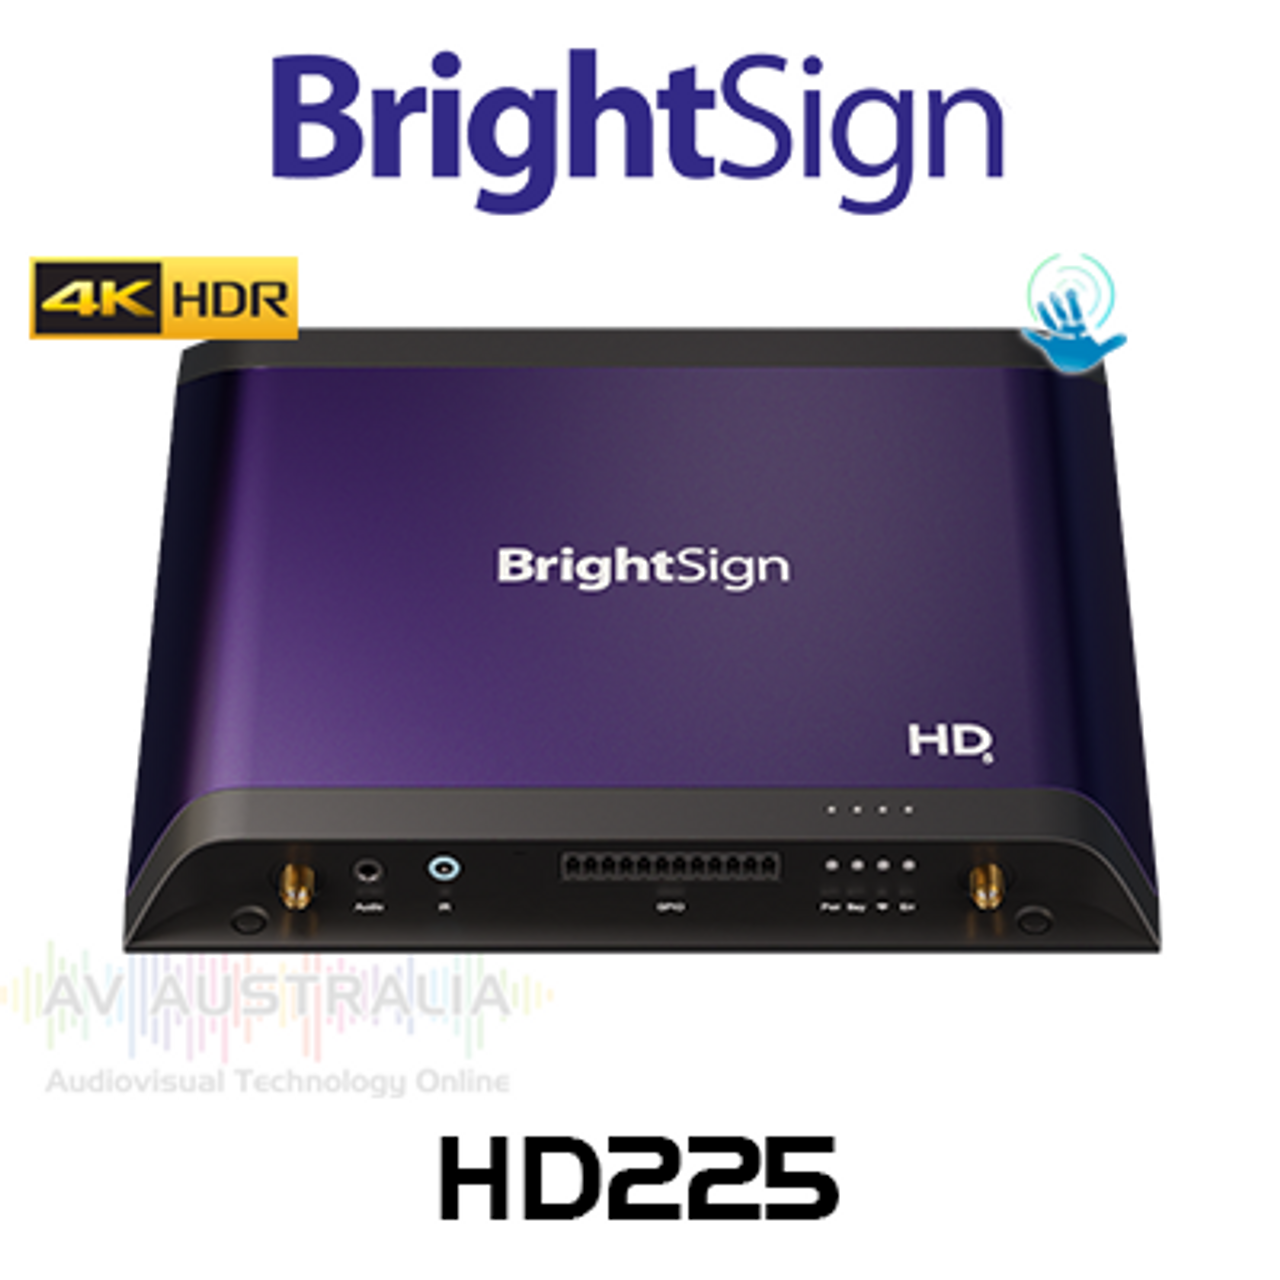 BrightSign HD225 Mainstream 4K H.265 HTML5 Interactive Digital Signage Player